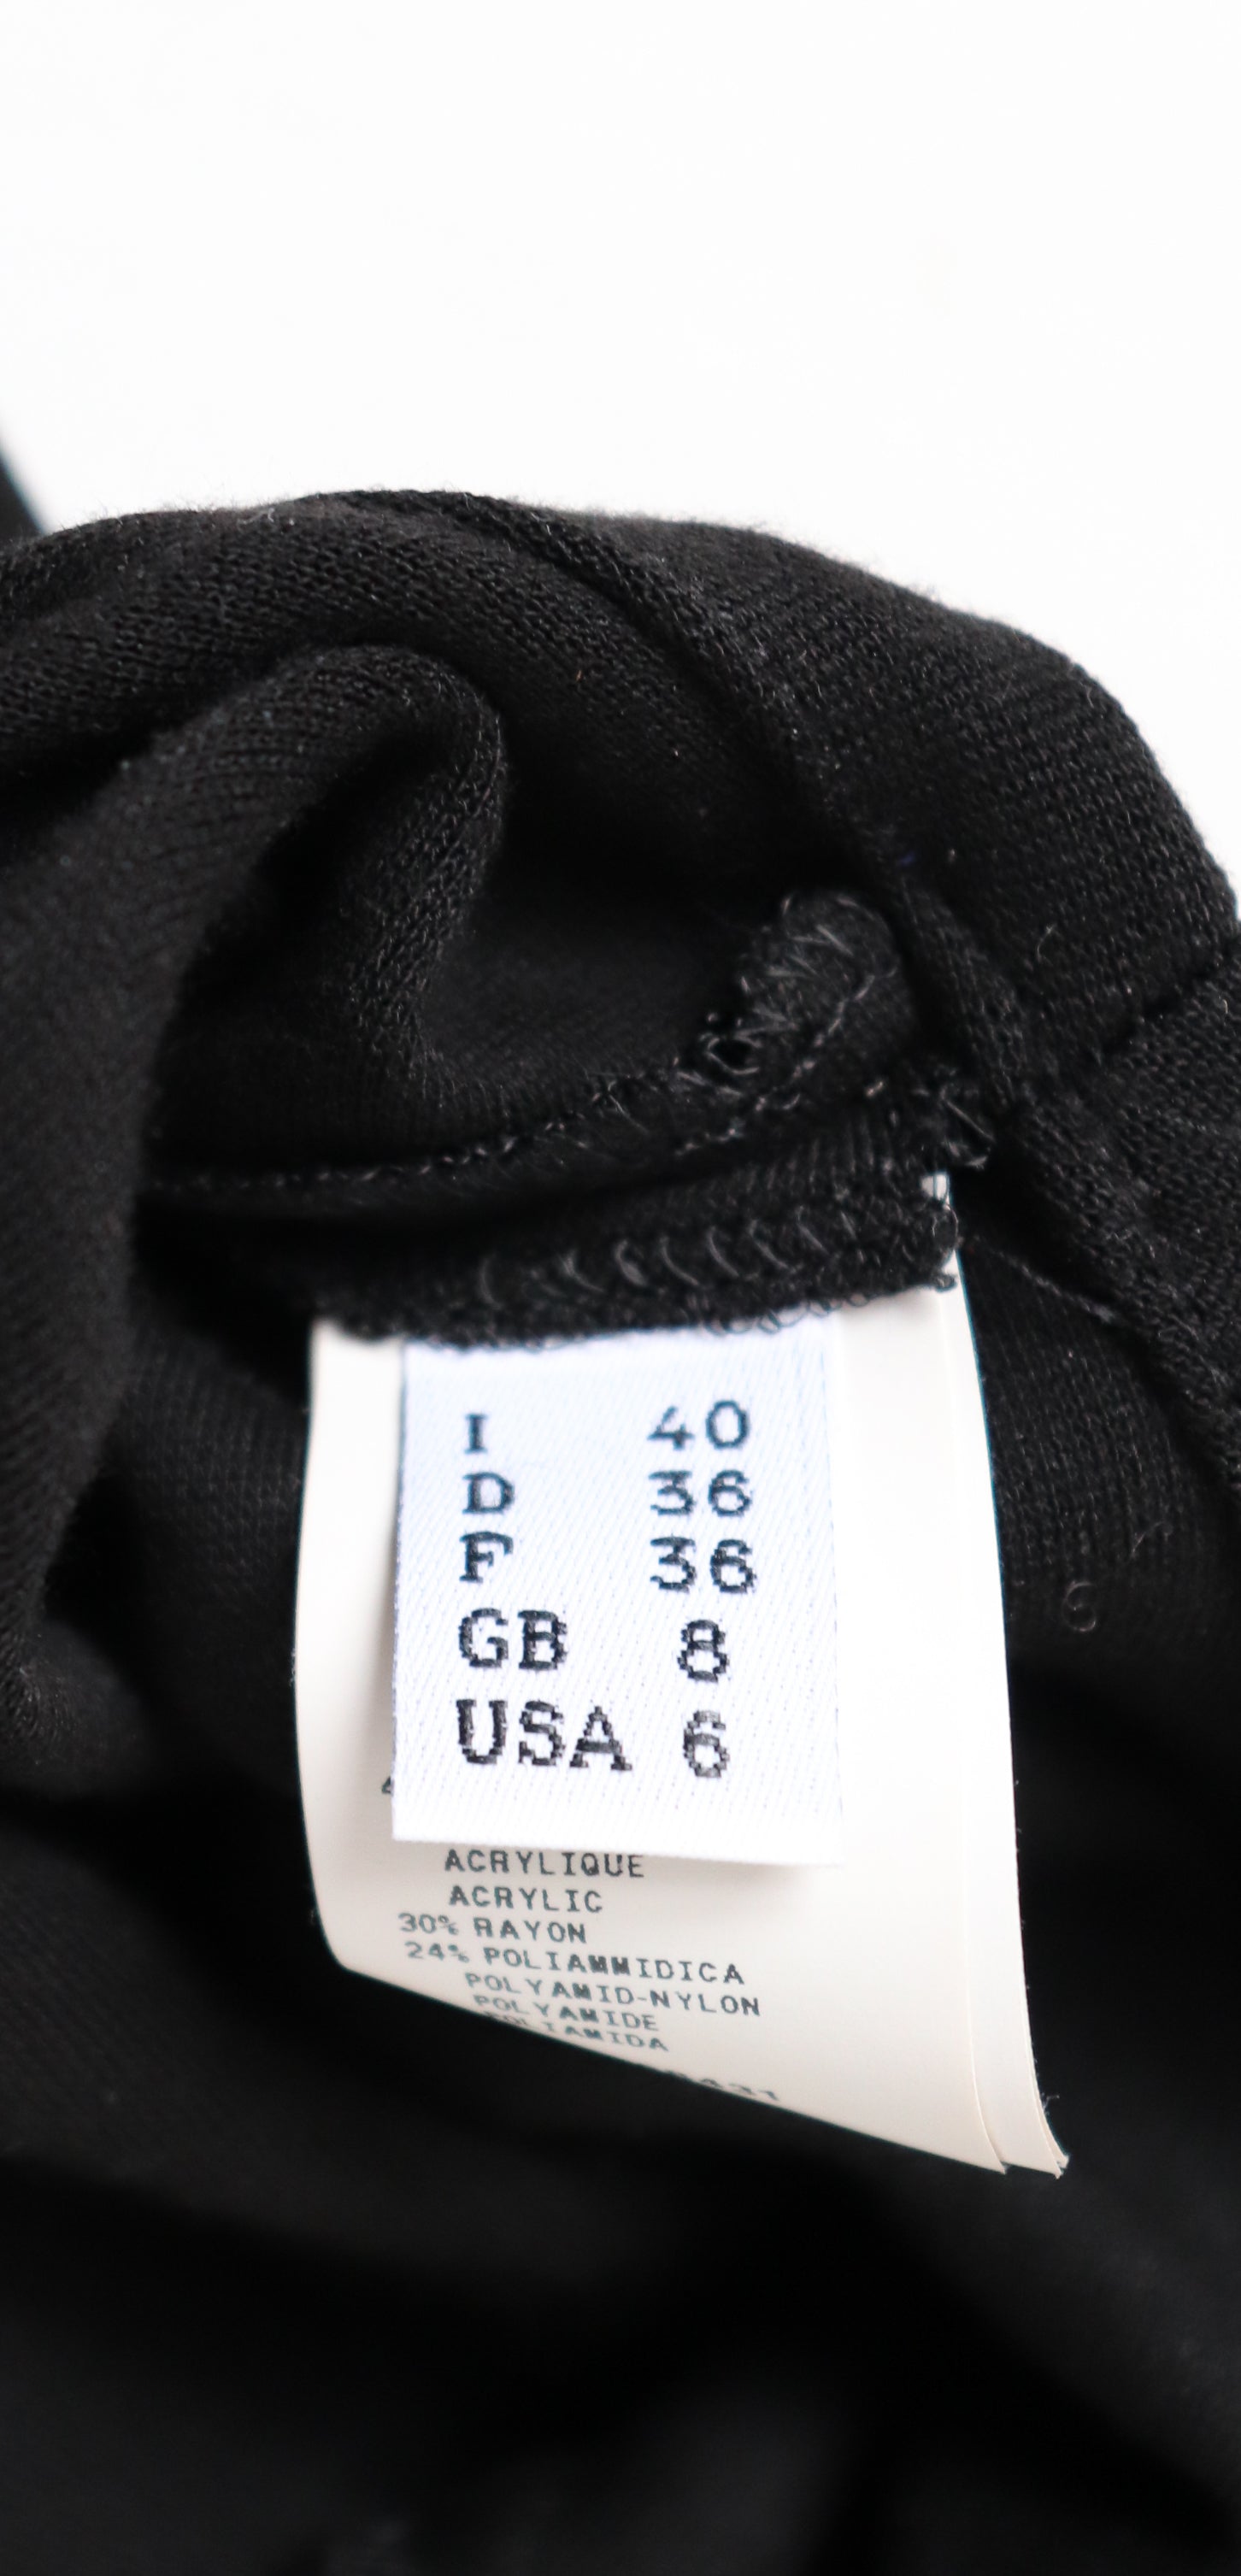 Cacharel Black Dress - Short Sleeve - Stretchy - Label F36 / GB 8 - Fit UK 10 / 12